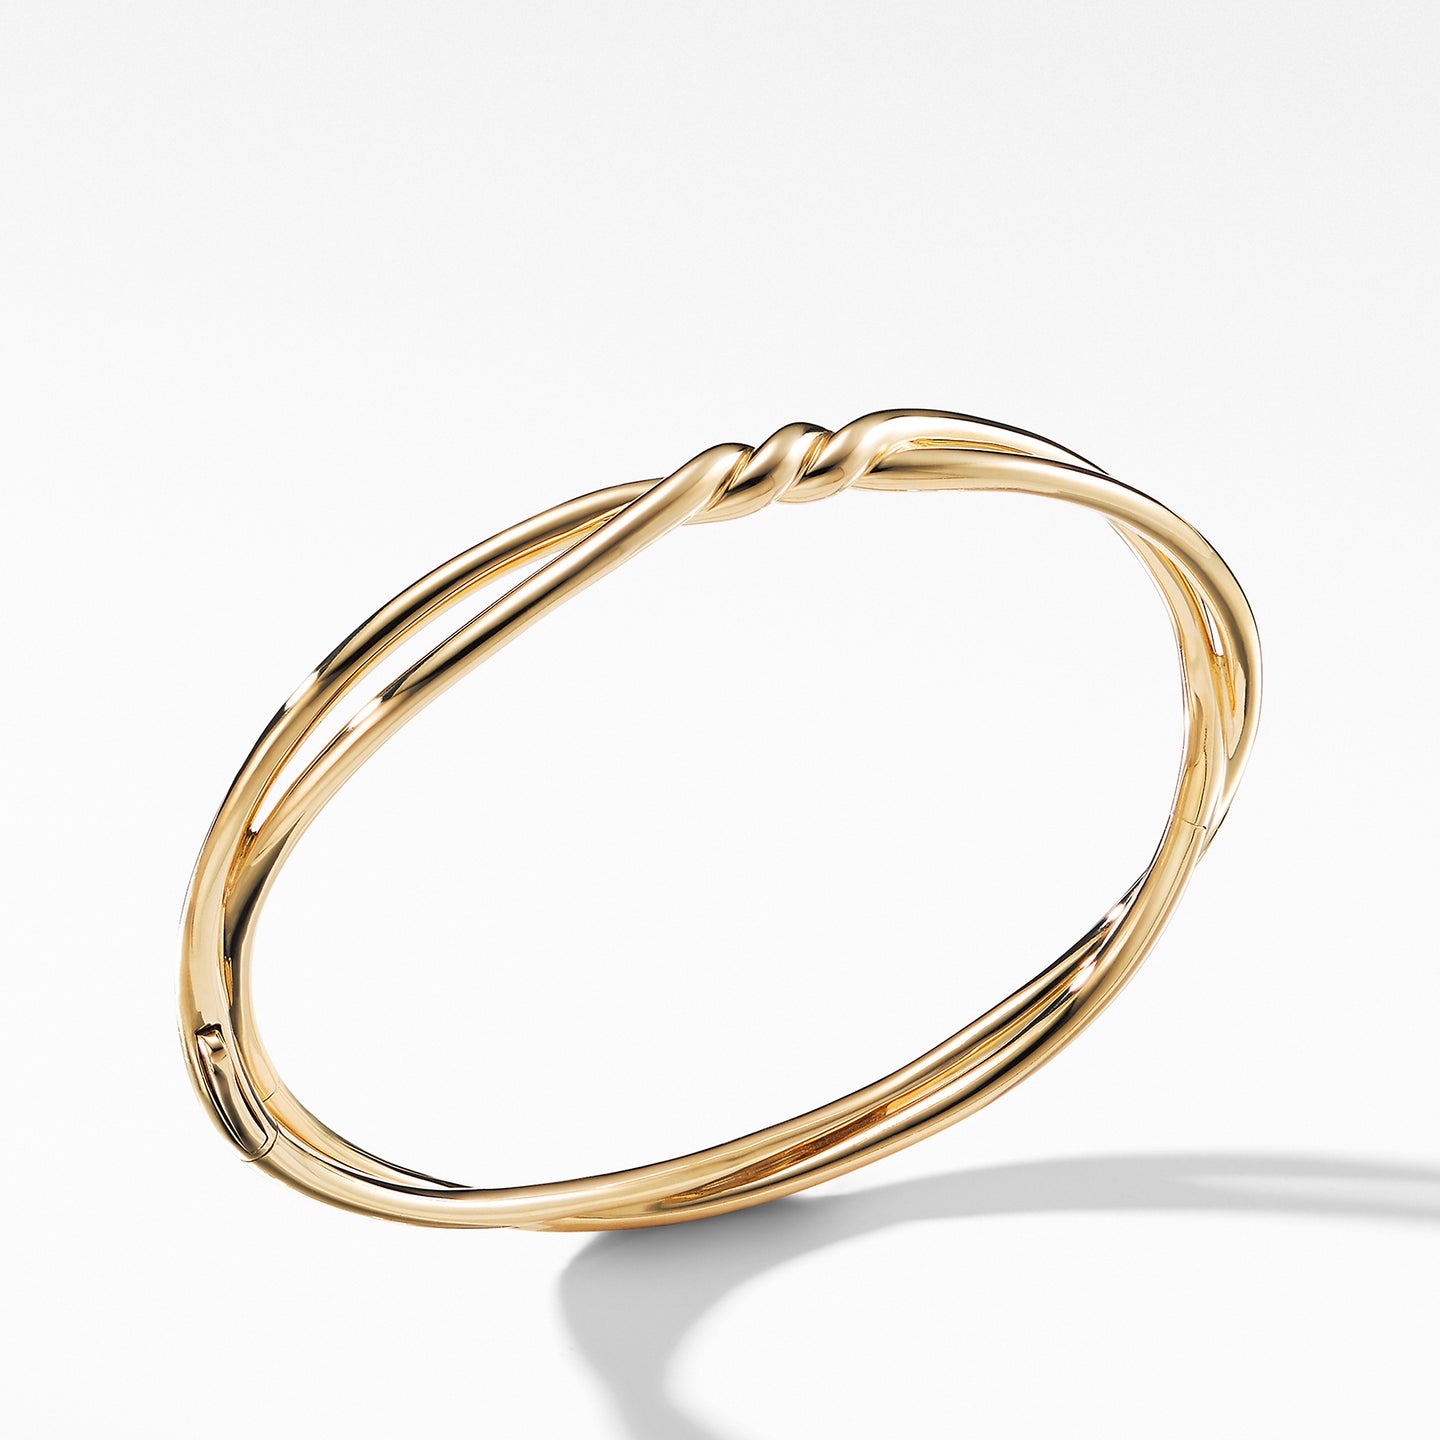 Continuance® Center Twist Bracelet in 18K Gold, Size Large